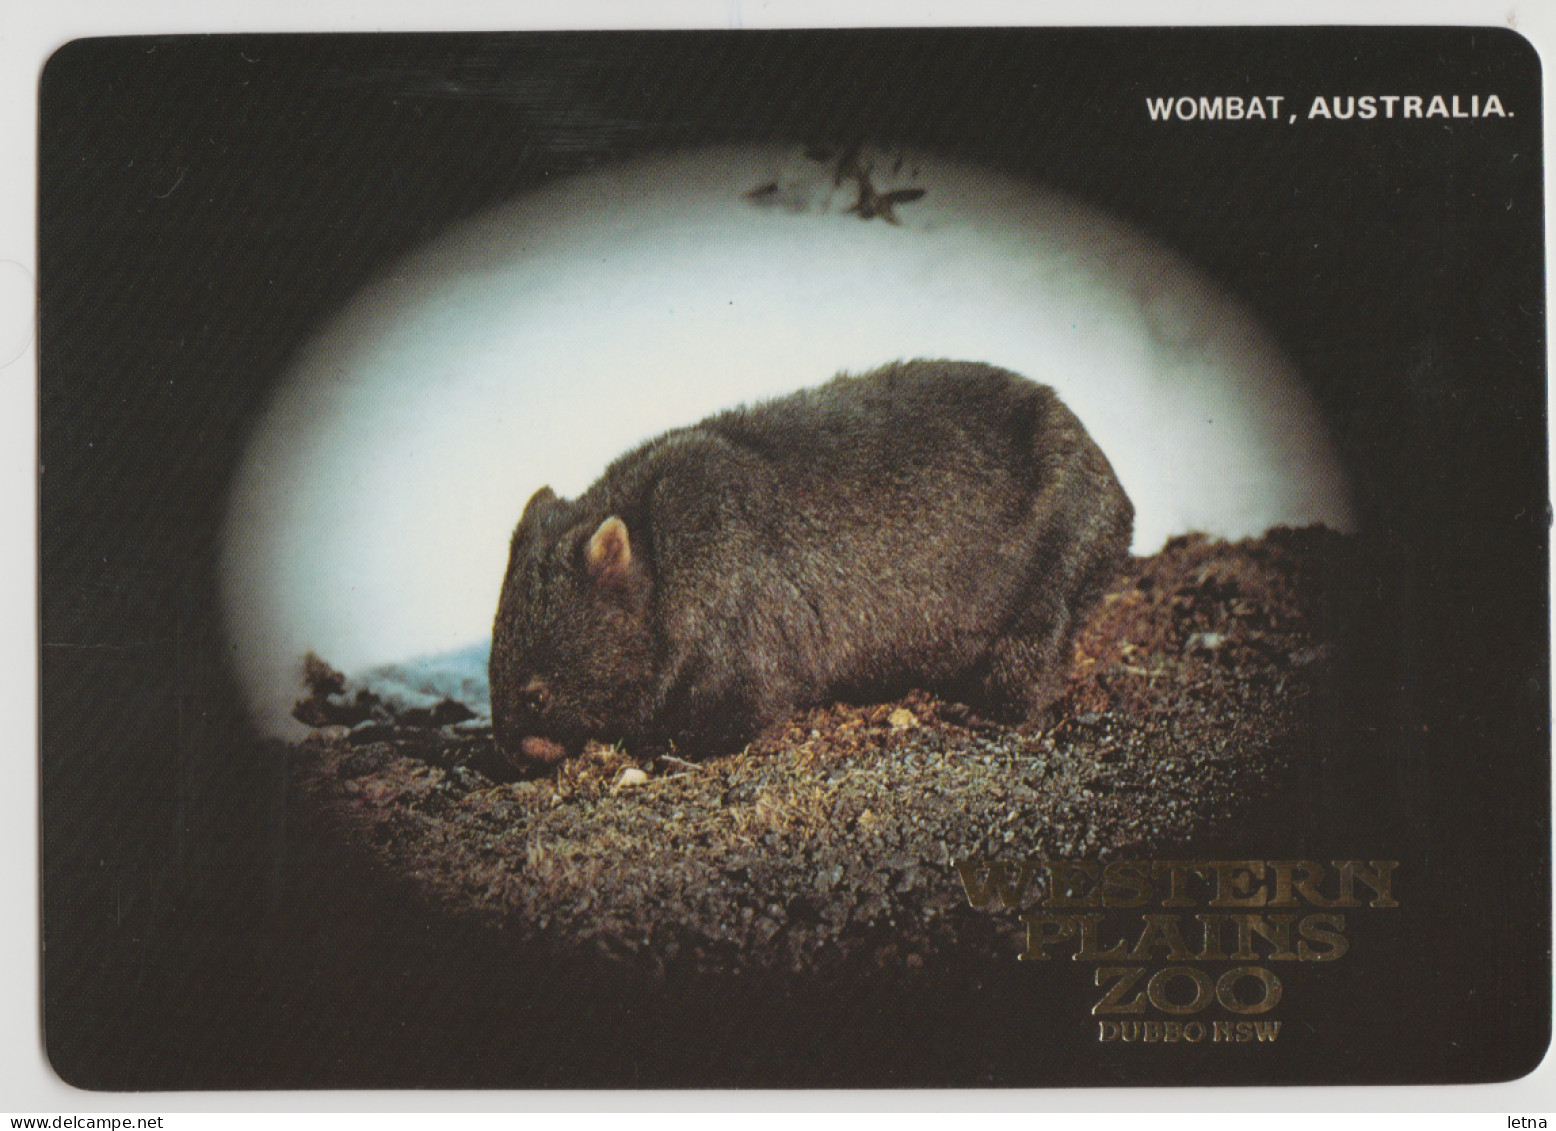 Australia NEW SOUTH WALES NSW Wombat Western Plains Zoo DUBBO Murray Views W713A Postcard C1980s - Dubbo